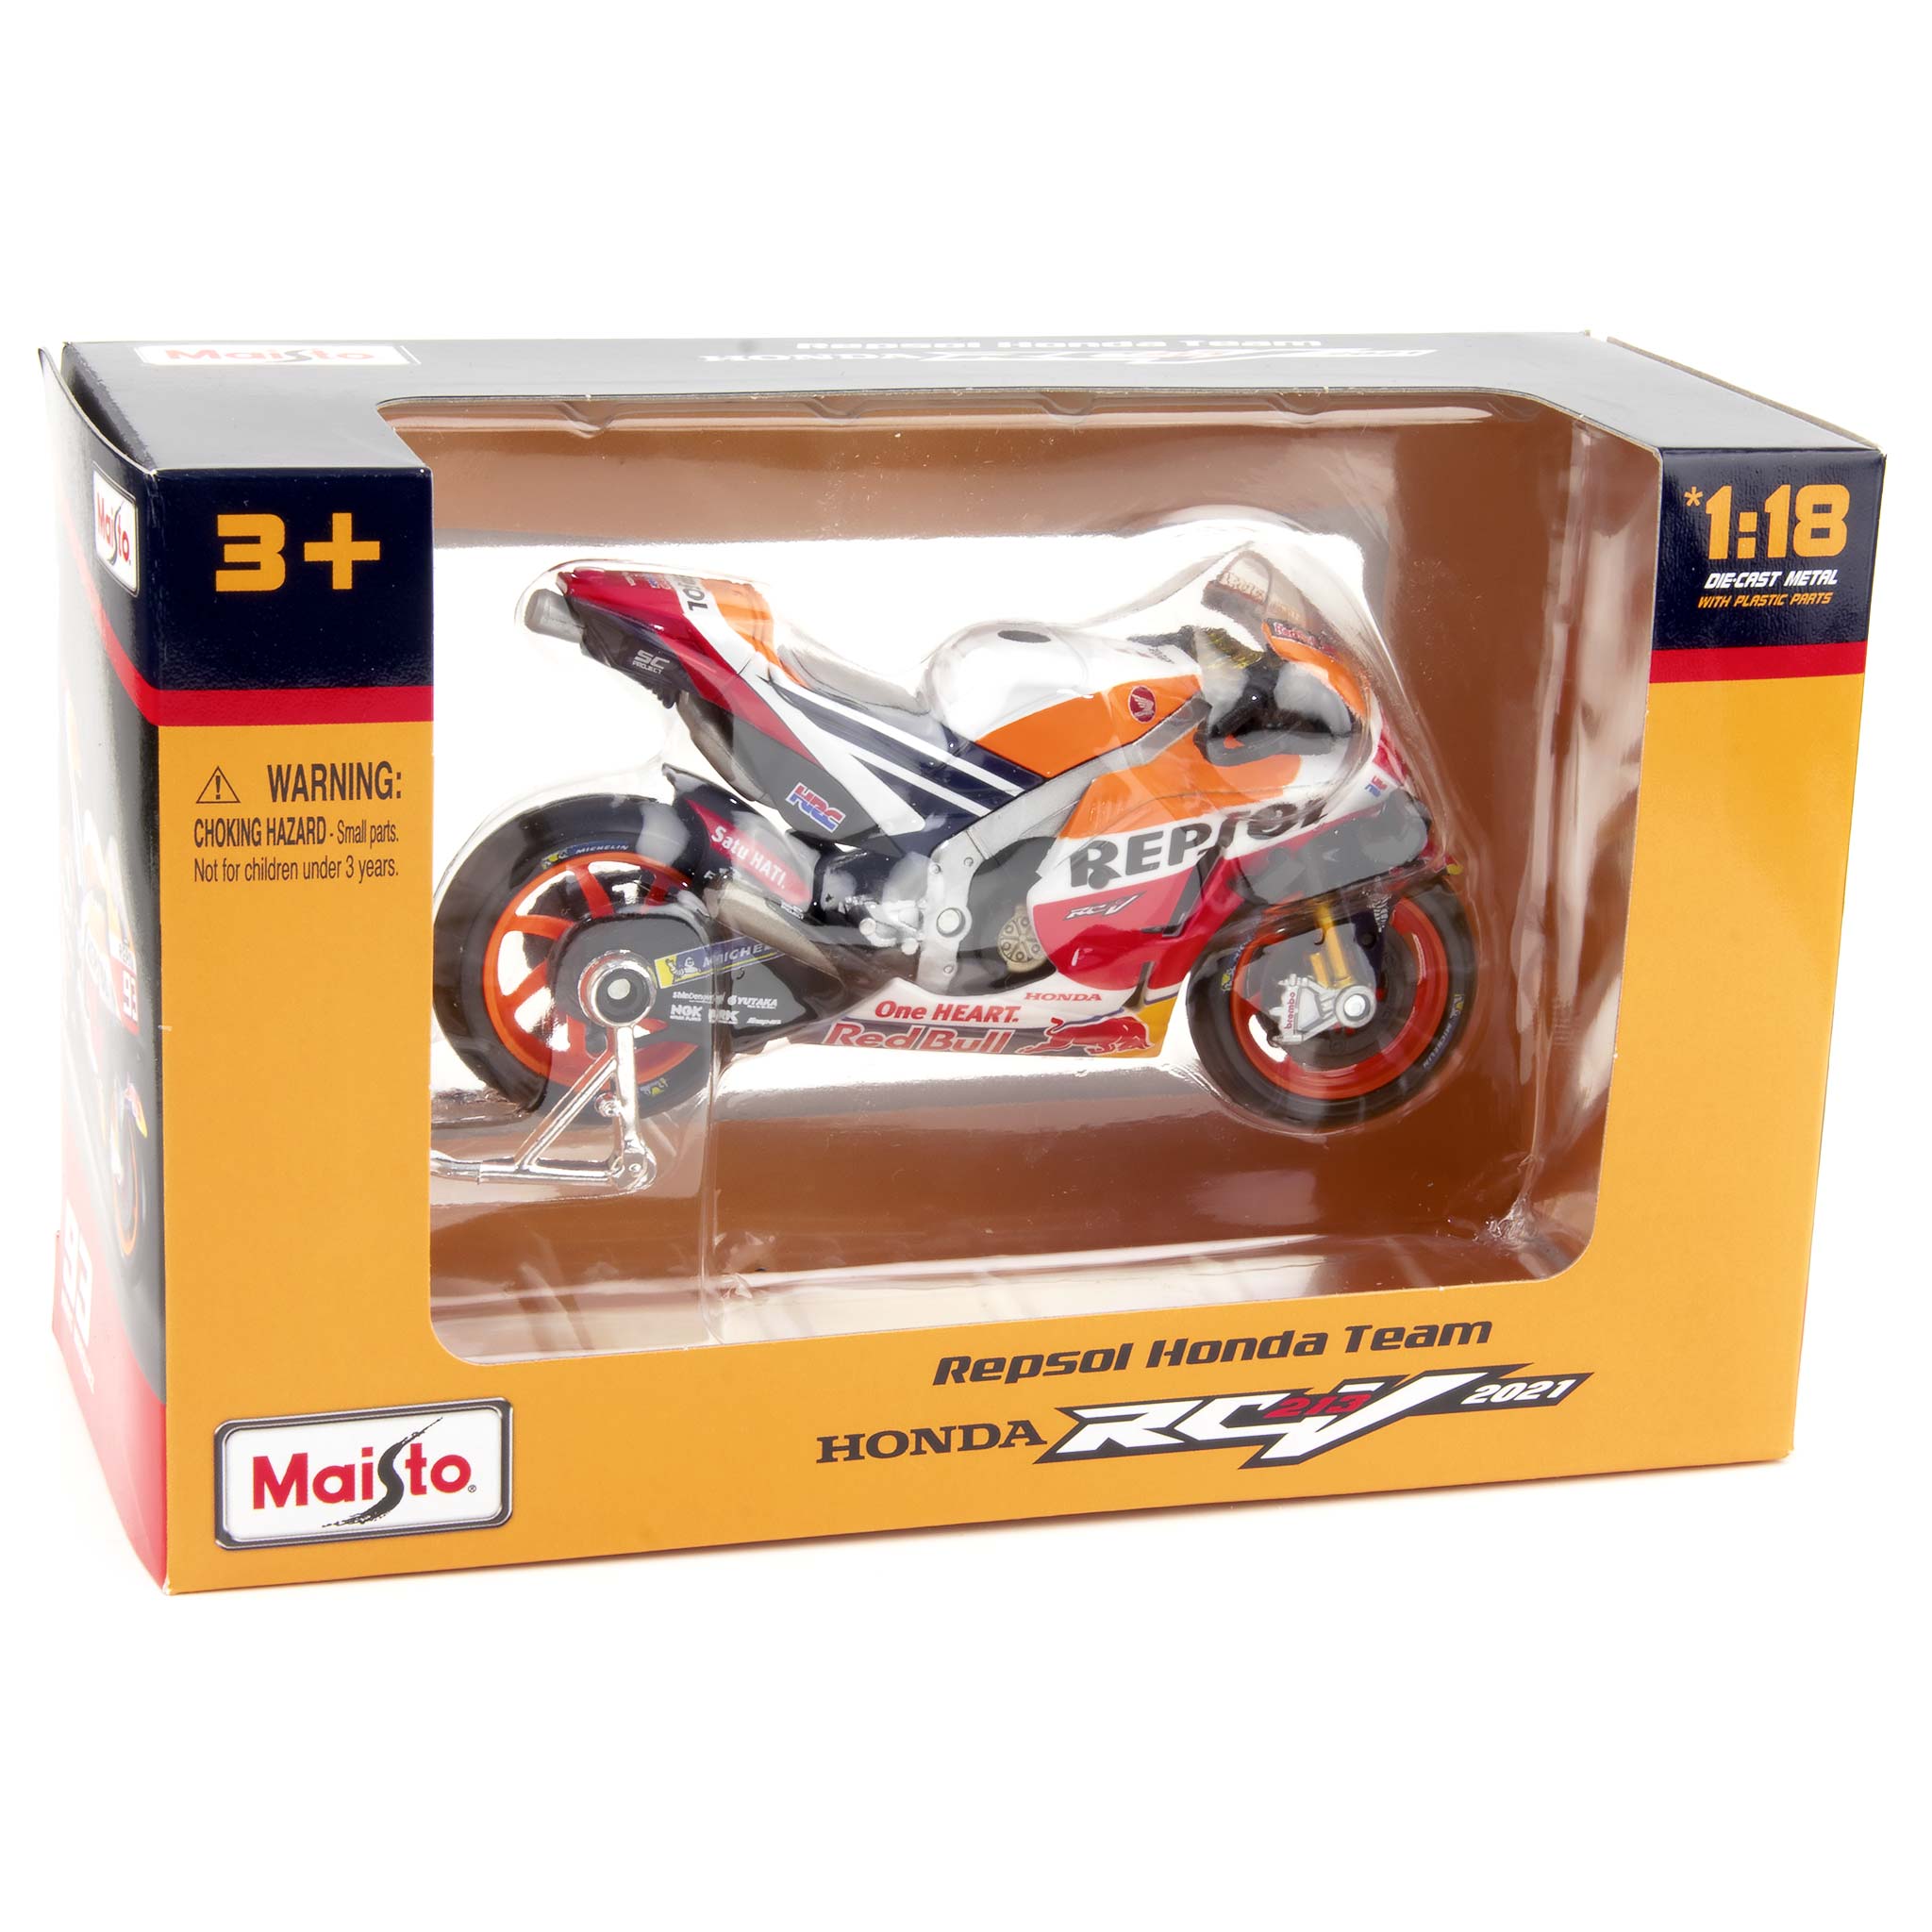 Honda RC213V Repsol #44 MotoGP 2021 Espargaro - 1:18 Scale Diecast Model Motorcycle